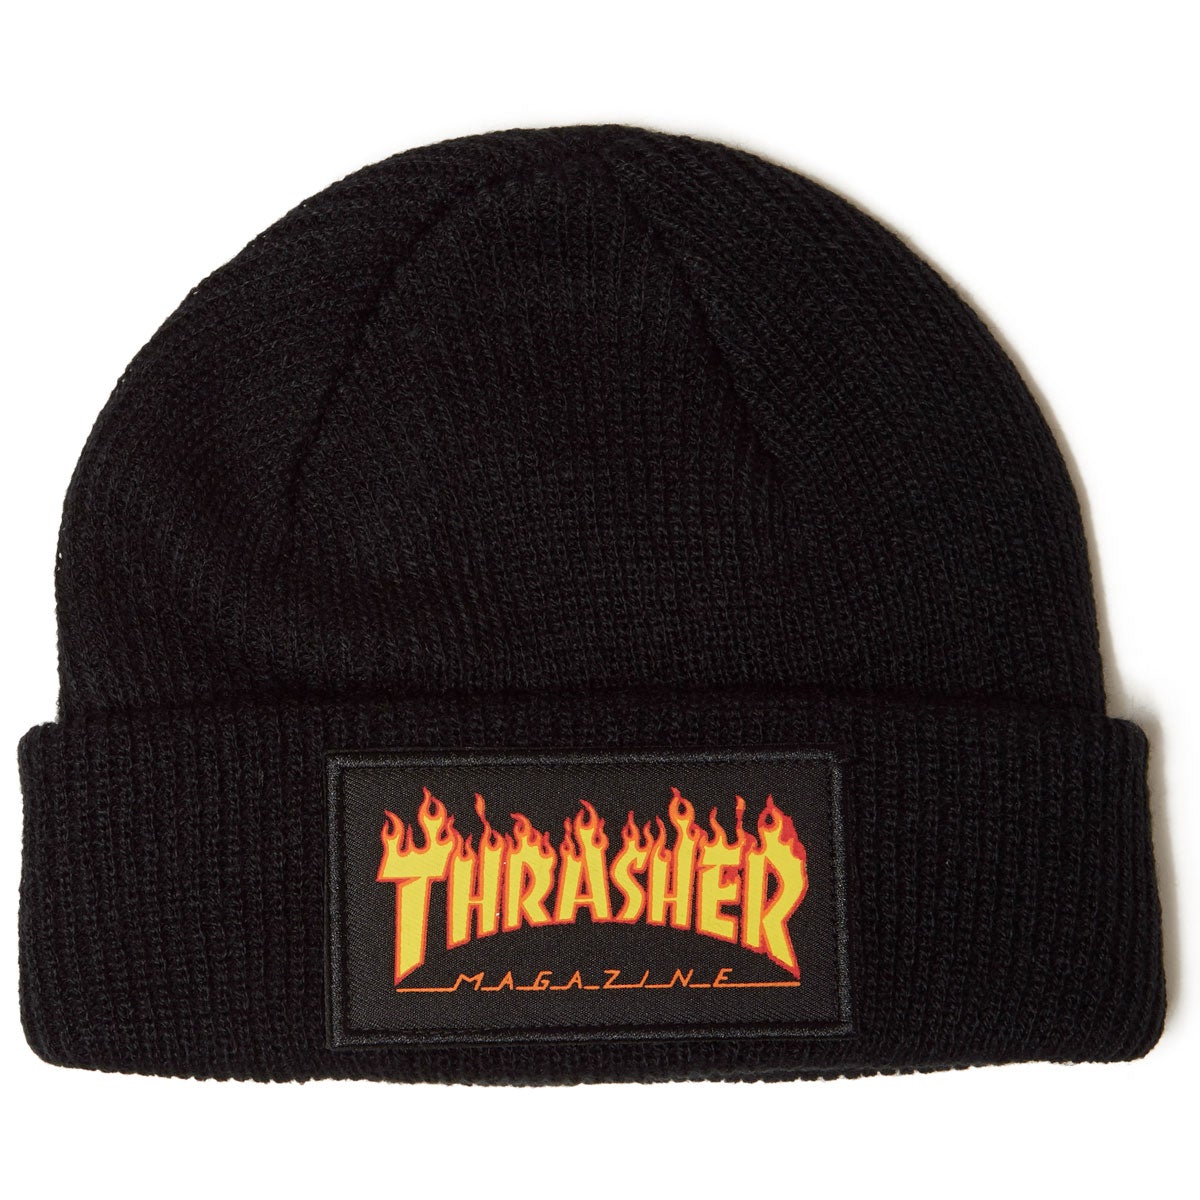 Thrasher Flame Logo Beanie - Black image 1